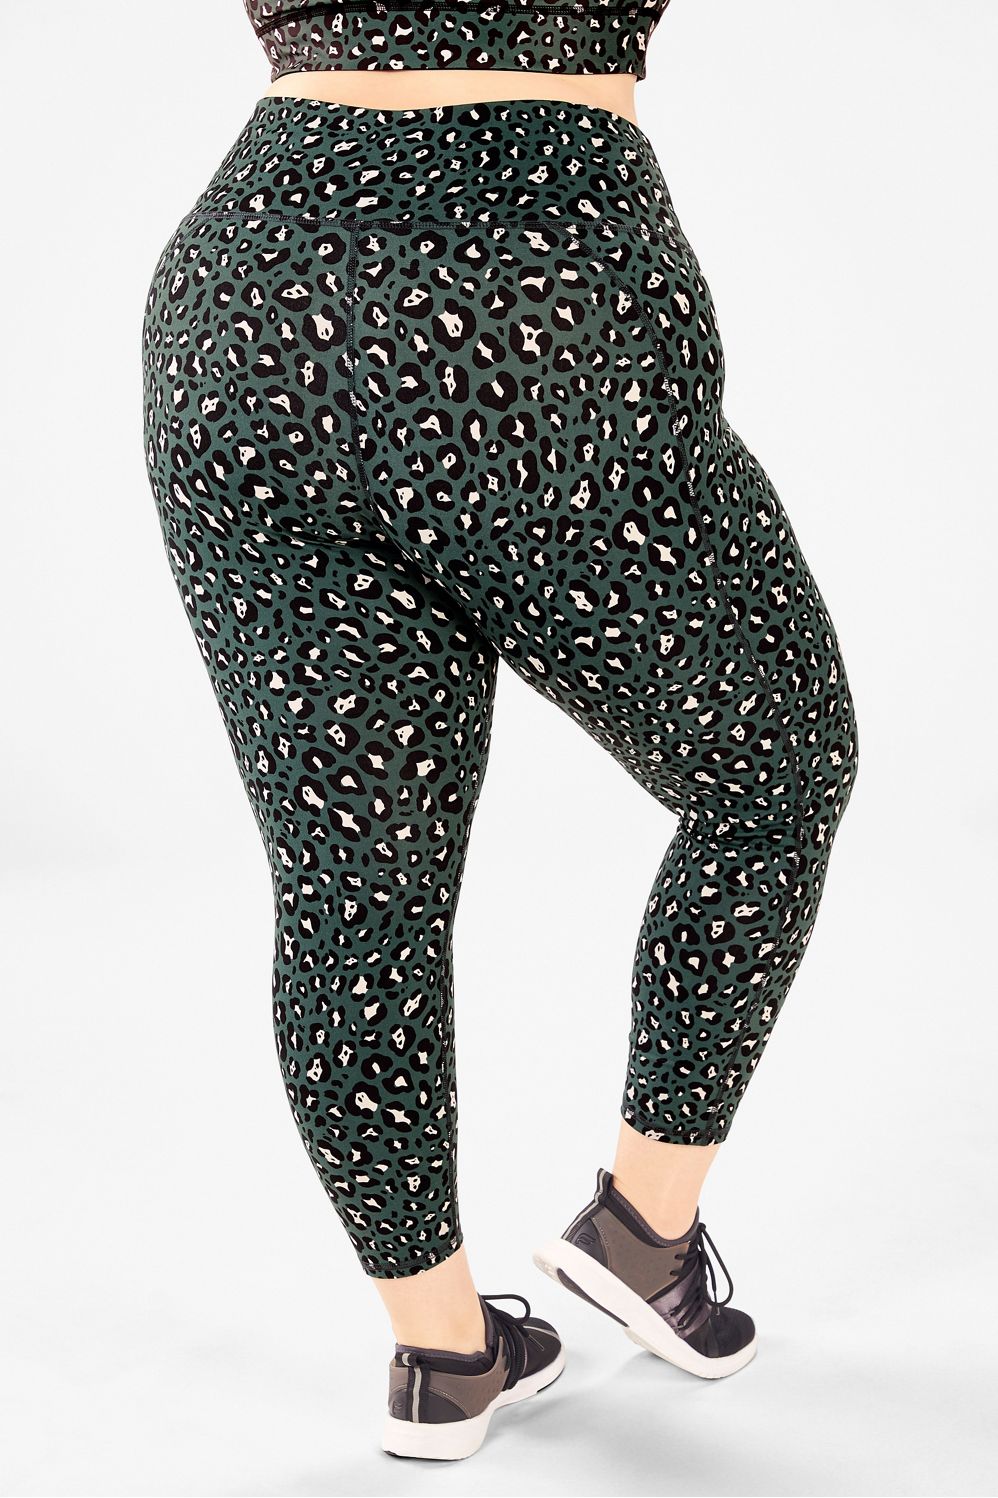 * Wholesale LOT of 60 * Women's Wild Fable Leggings Leopard Print Size: M 